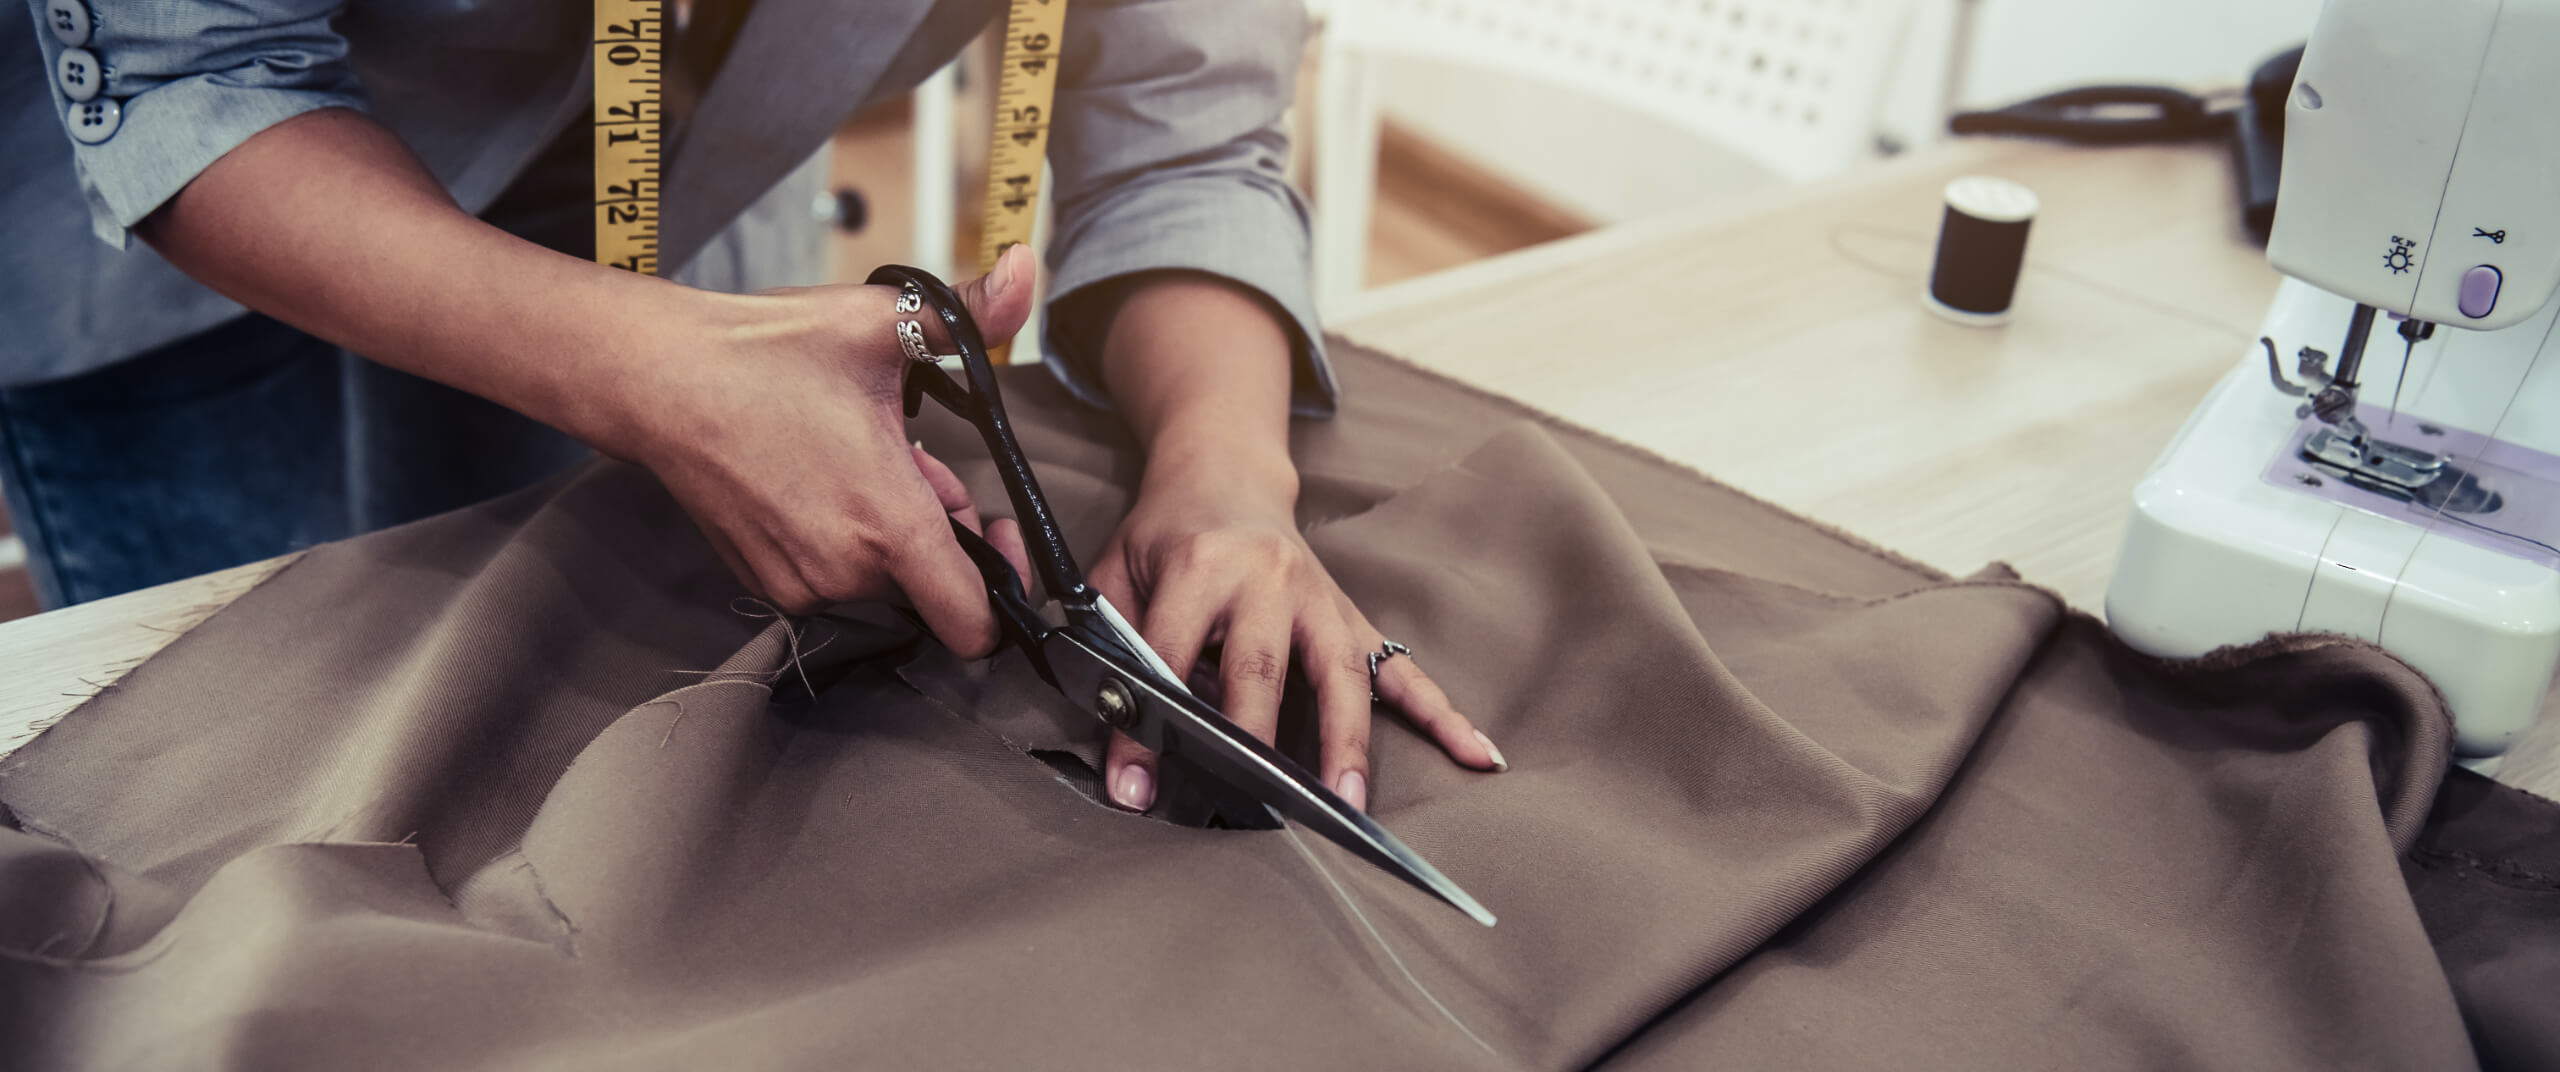 Woman cutting fabric